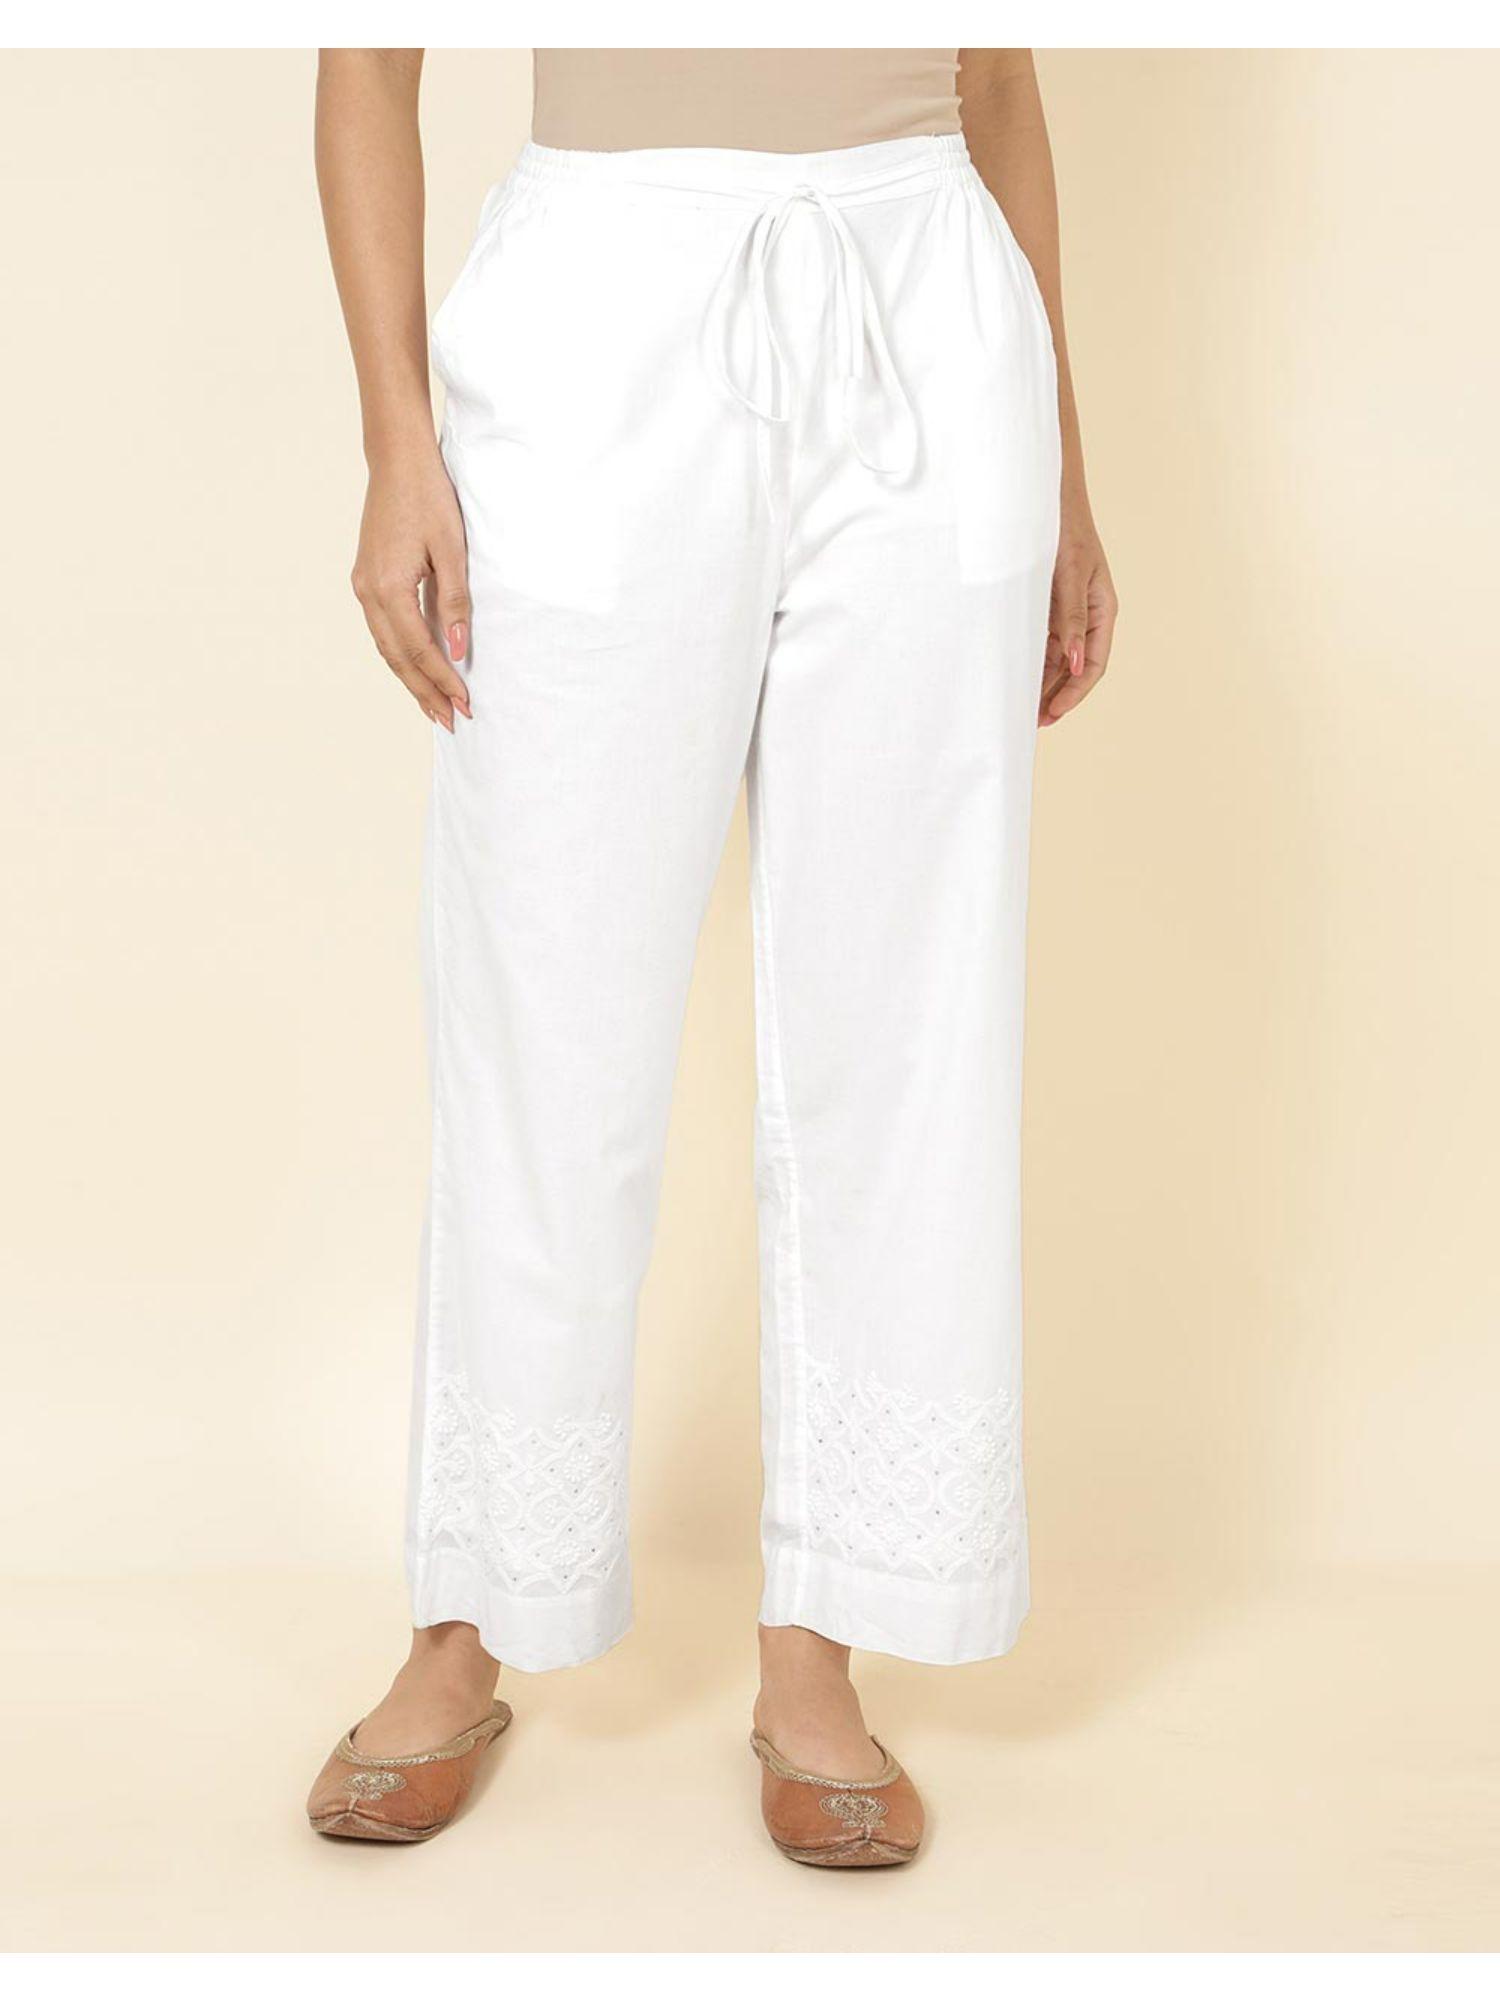 white cotton casual pant